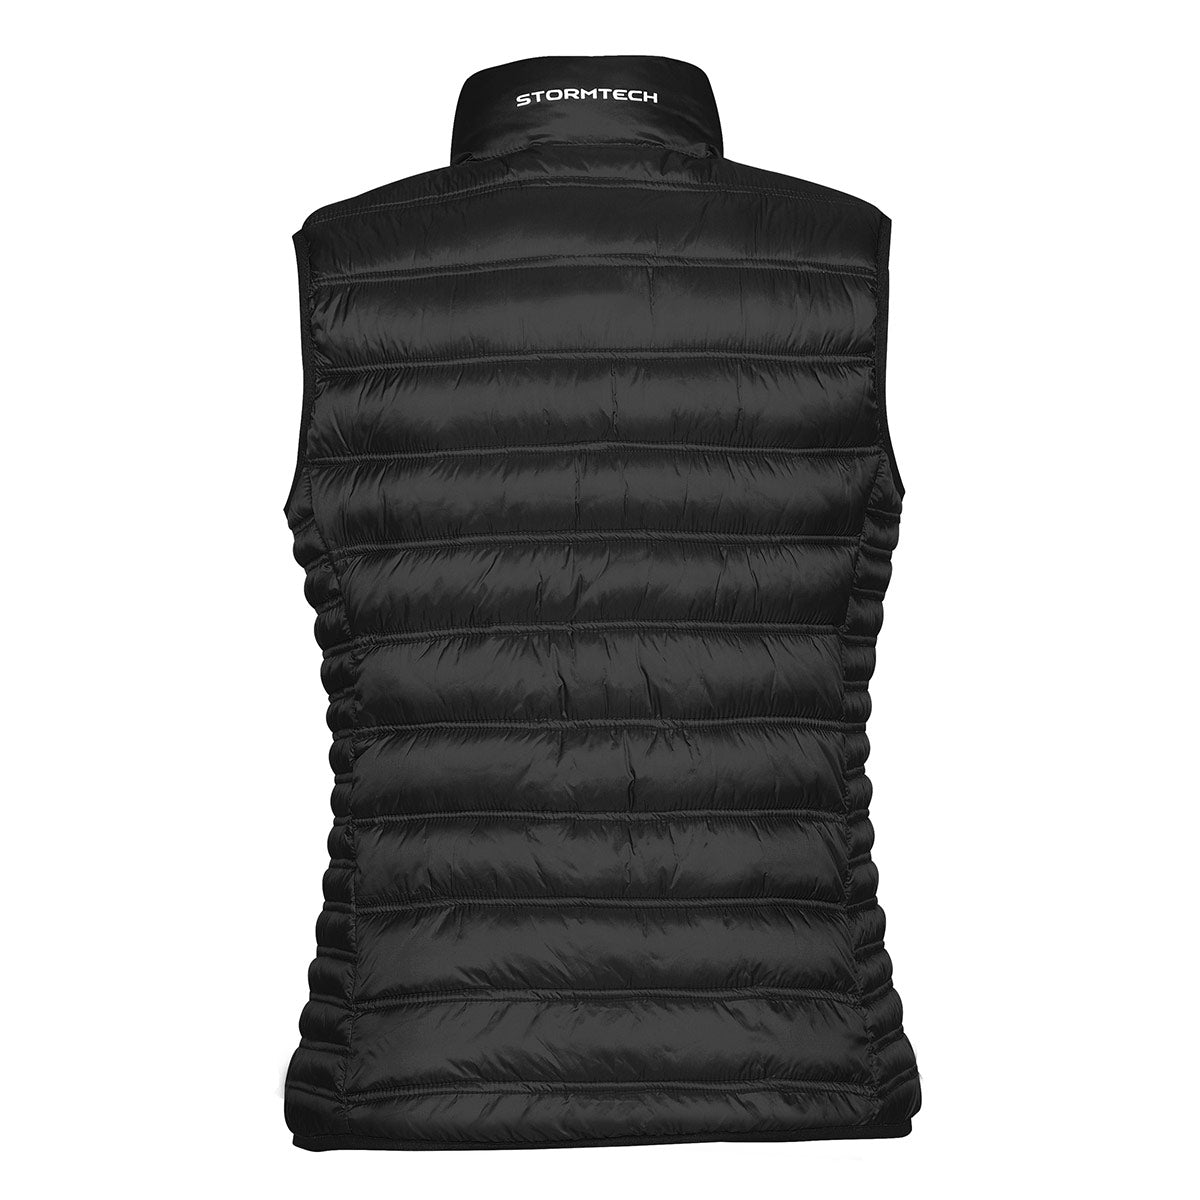 Thermal vest